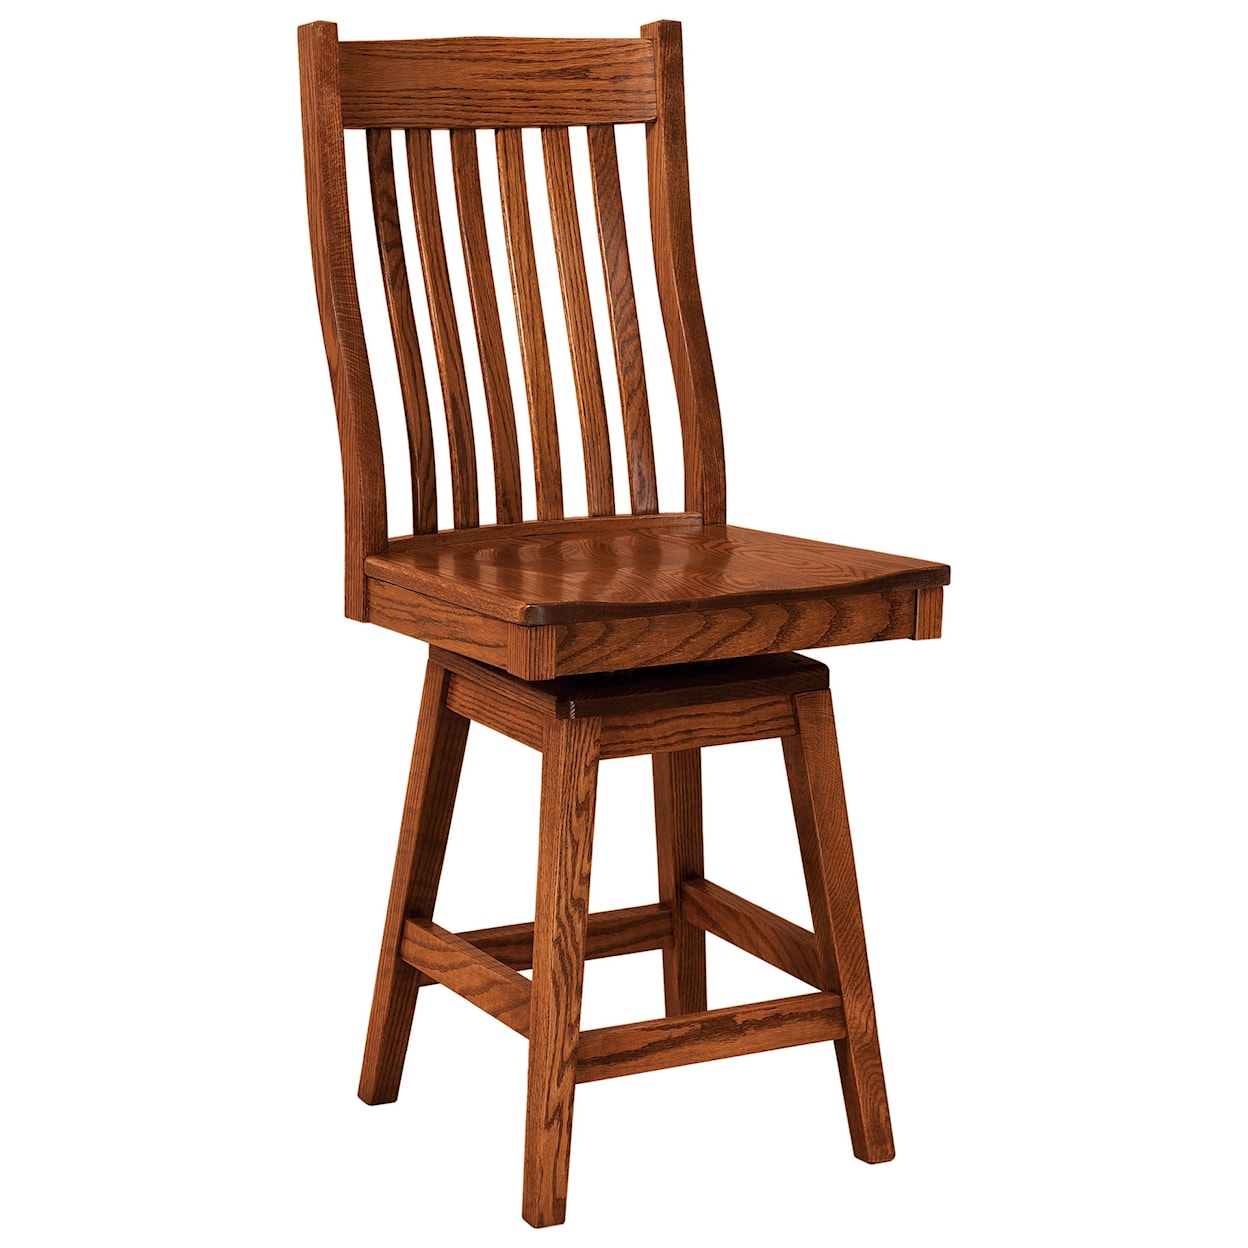 F&N Woodworking Sullivan Swivel Counter Height Stool - Fabric Seat